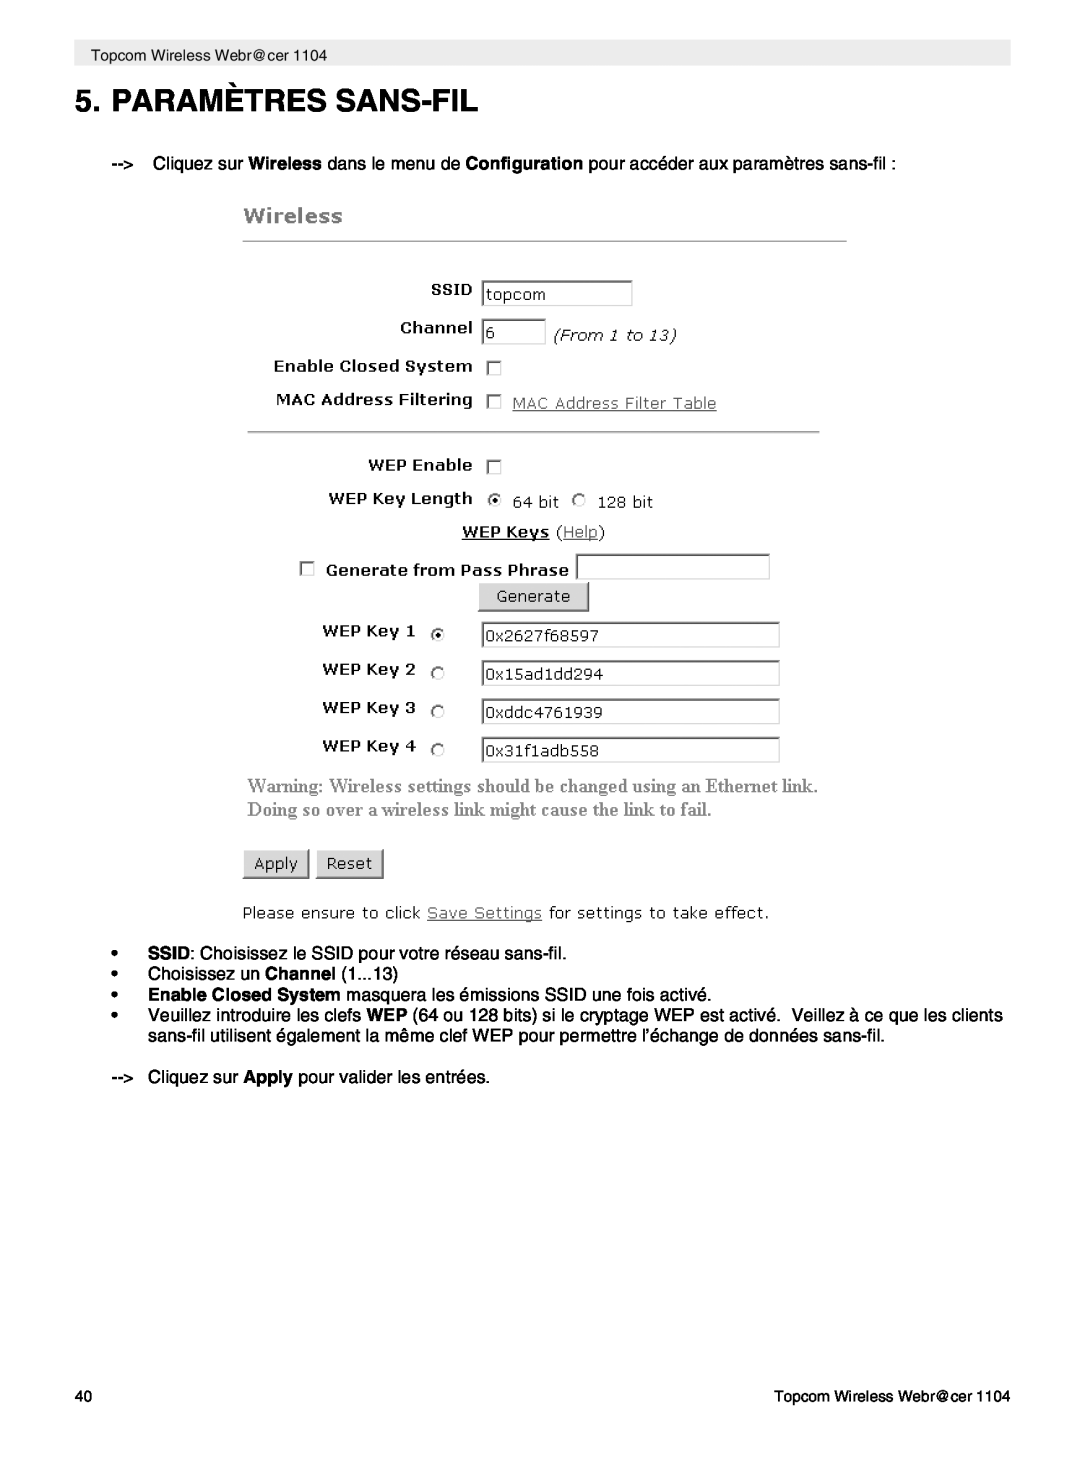 Topcom 1104 manual do utilizador Paramètres Sans-Fil 